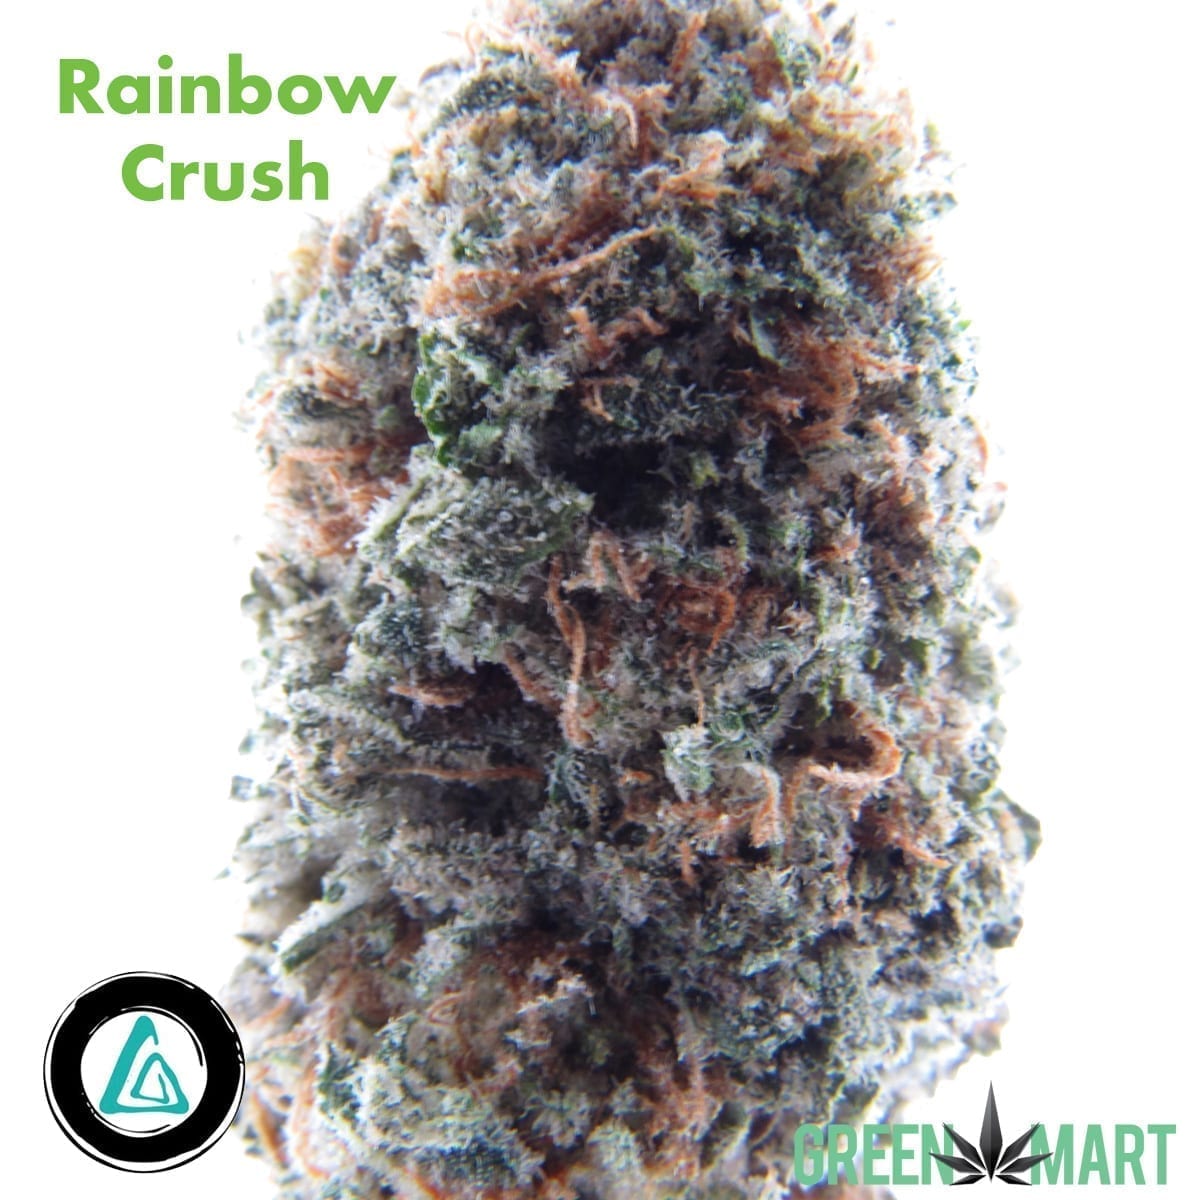 Rainbow Crush by Alibi Cannabis